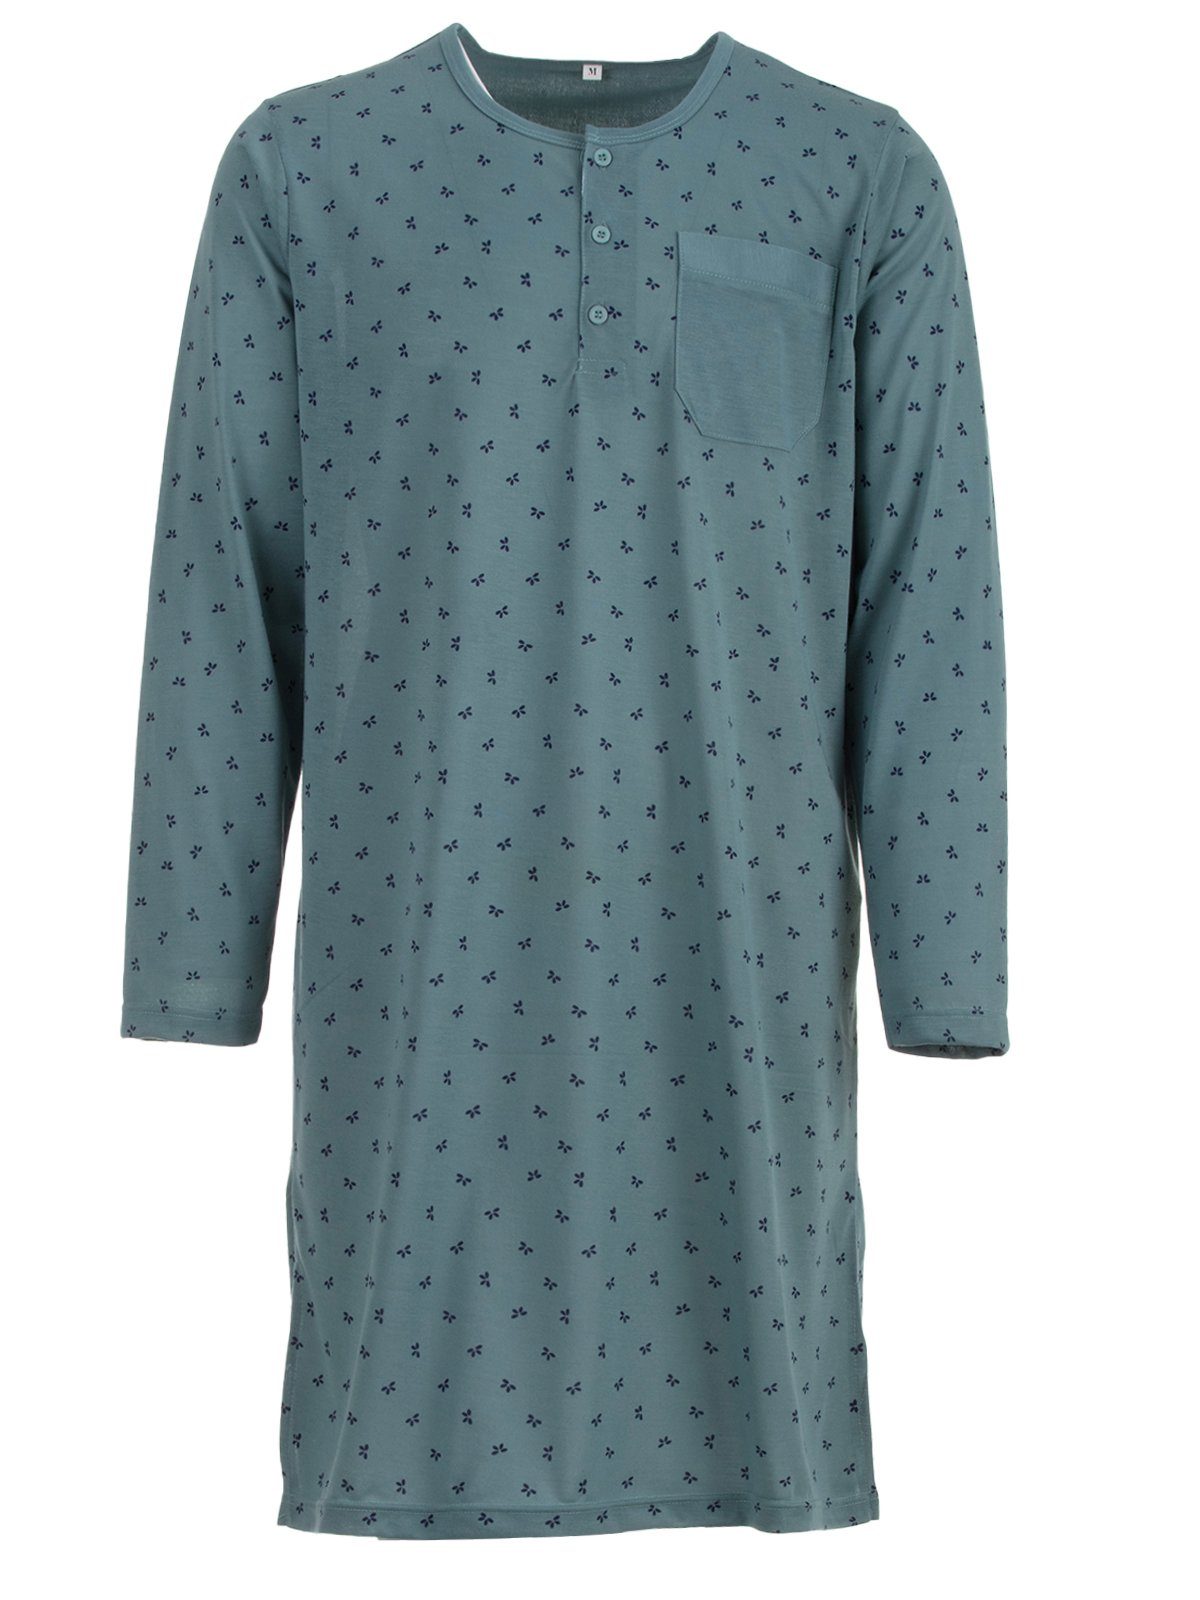 Lucky Nachthemd Uni Nachthemd Grafik Langarm petrol - Brusttasche